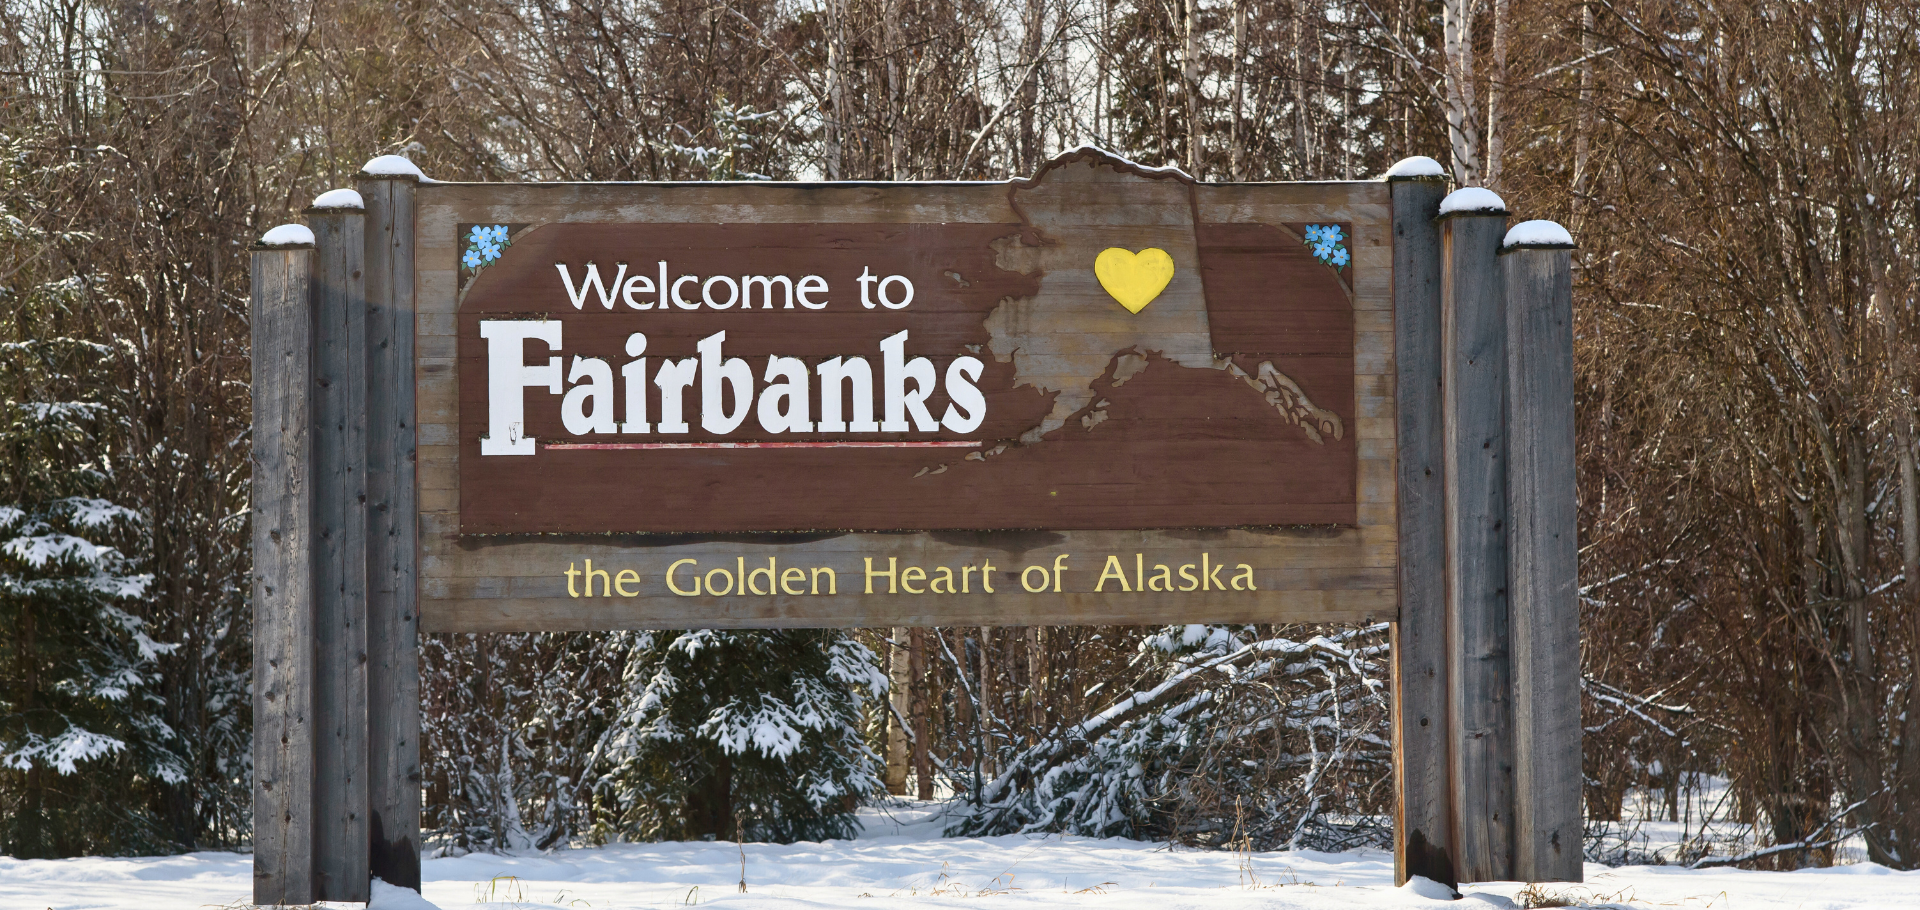 Fairbanks AK